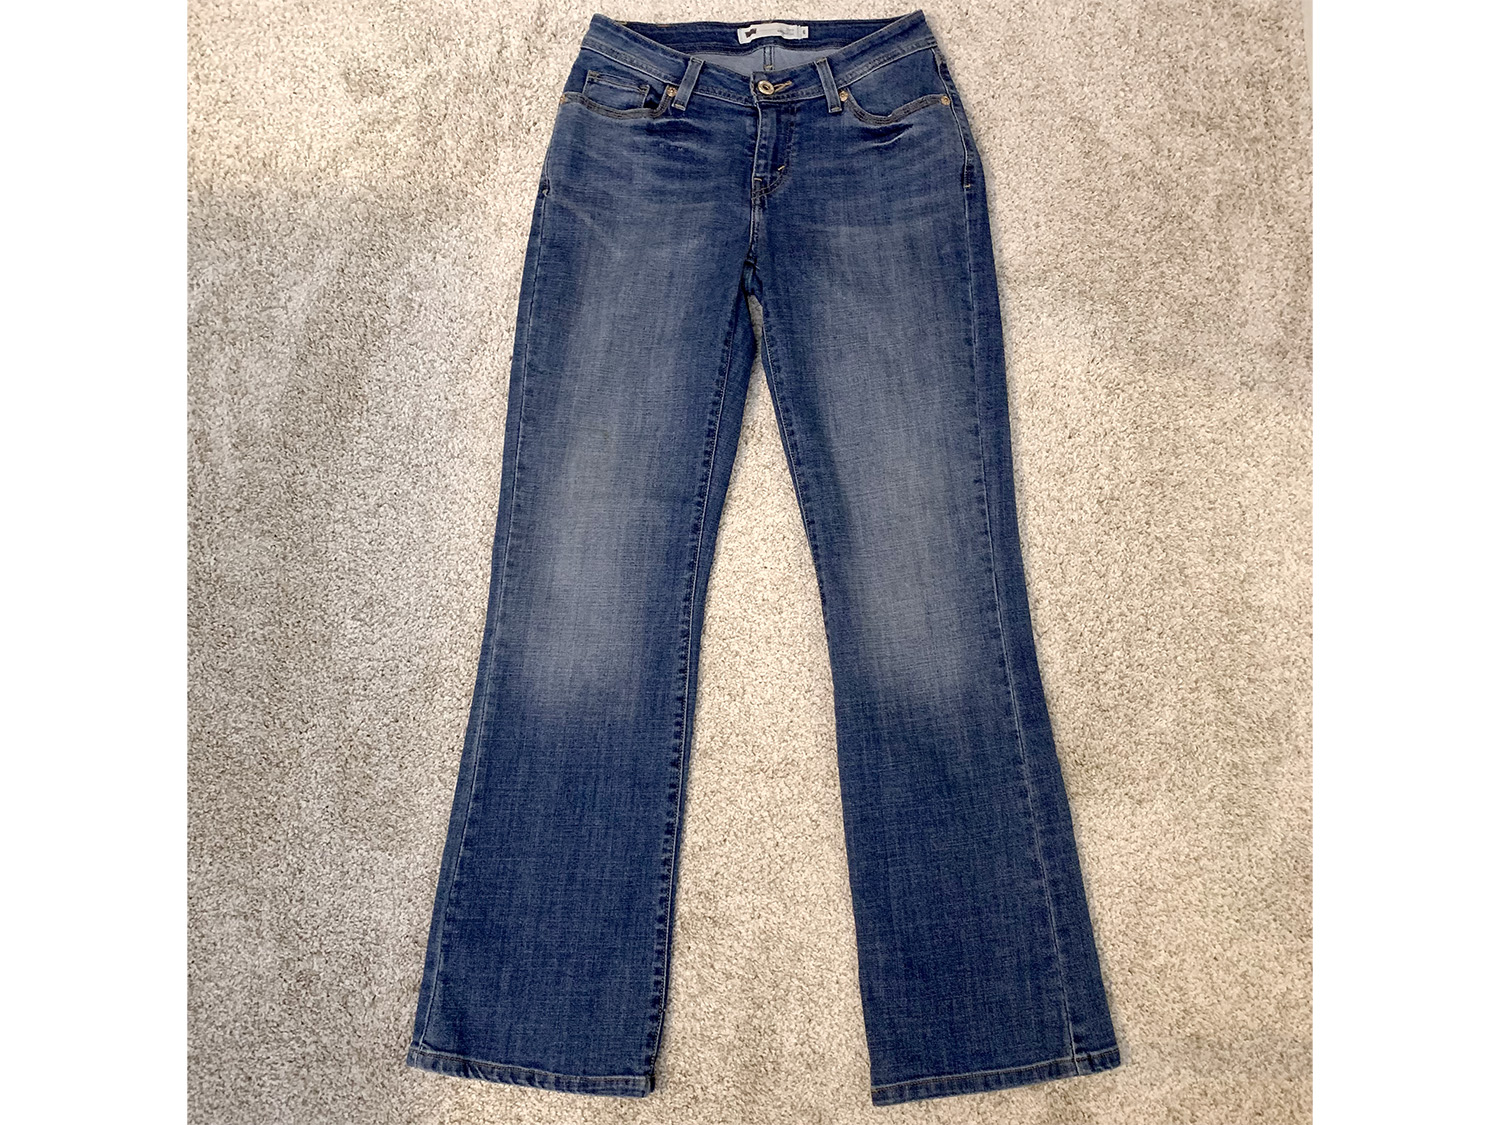 Levis Womens Curvy 529 Boot Cut Jeans Size 6 at The MenuGem Web Store